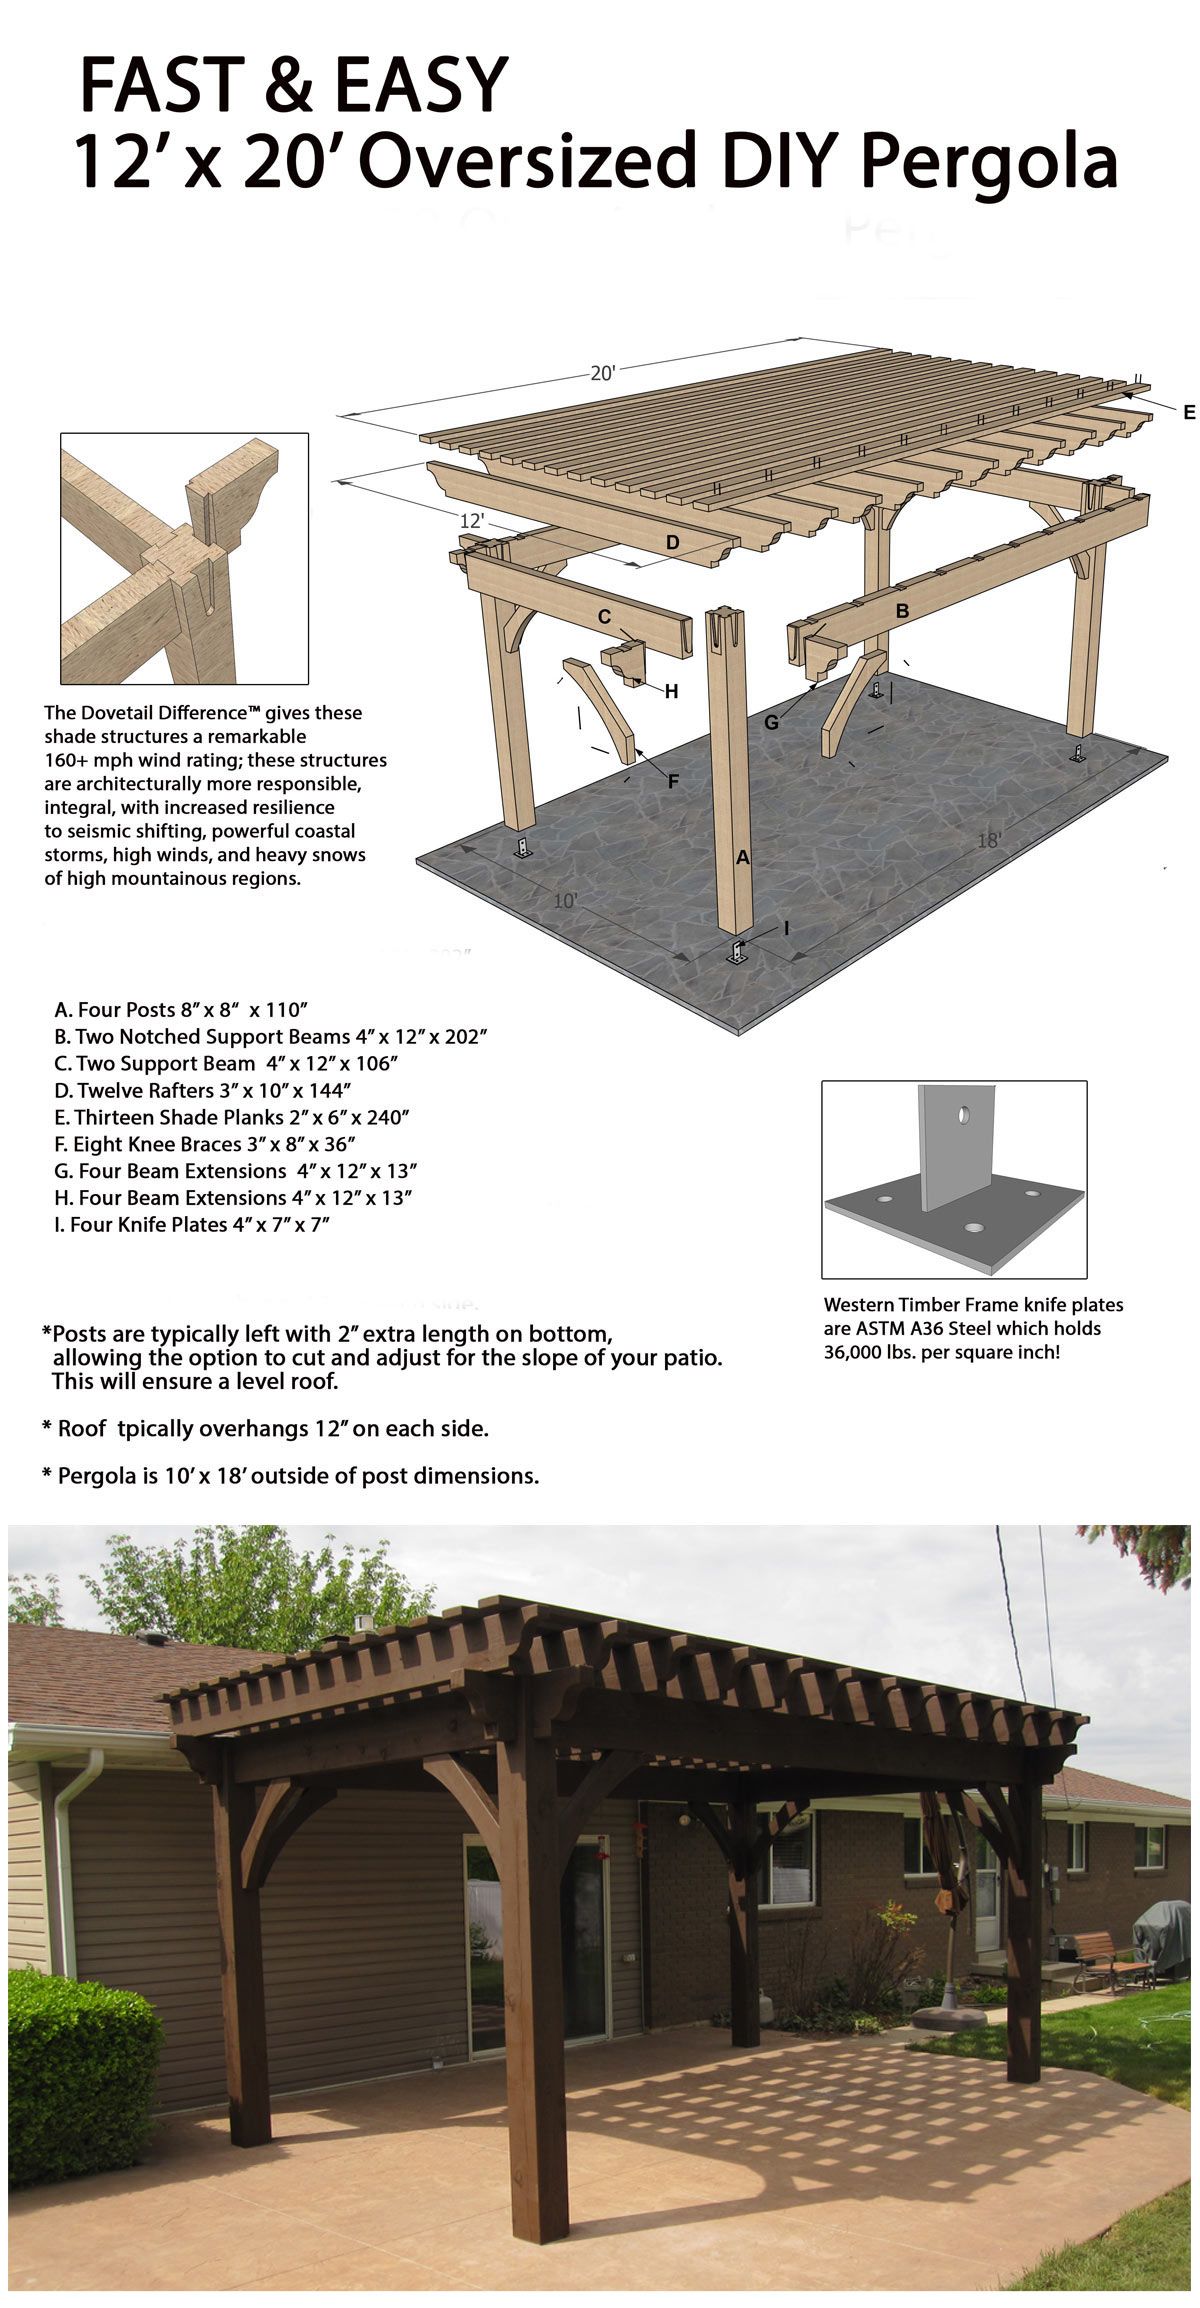 Pergola Bois Brico Depot Frais Easily Build A Fast Diy Beautiful Backyard Shade Structure